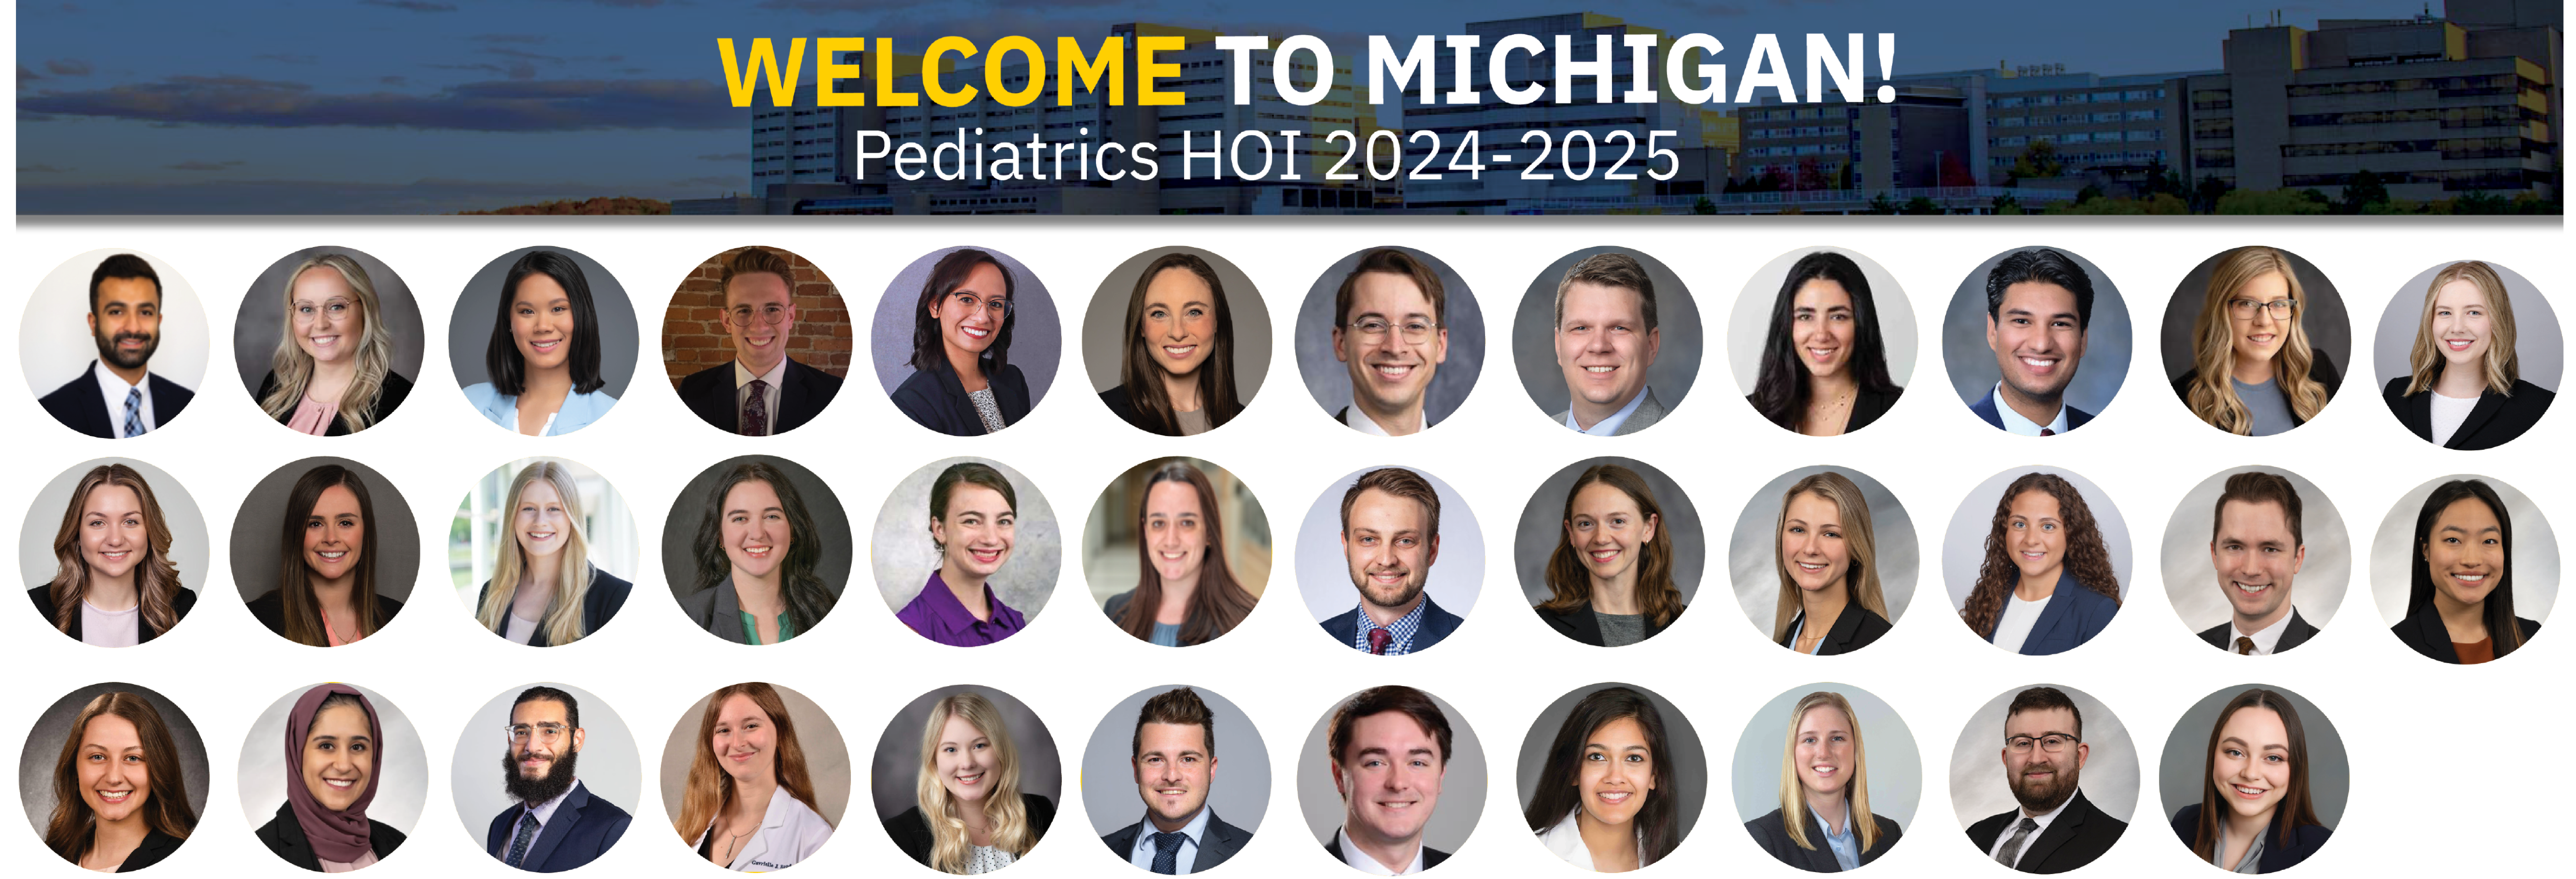 Pediatric HOI 2024-2025. 35 new intern photos.